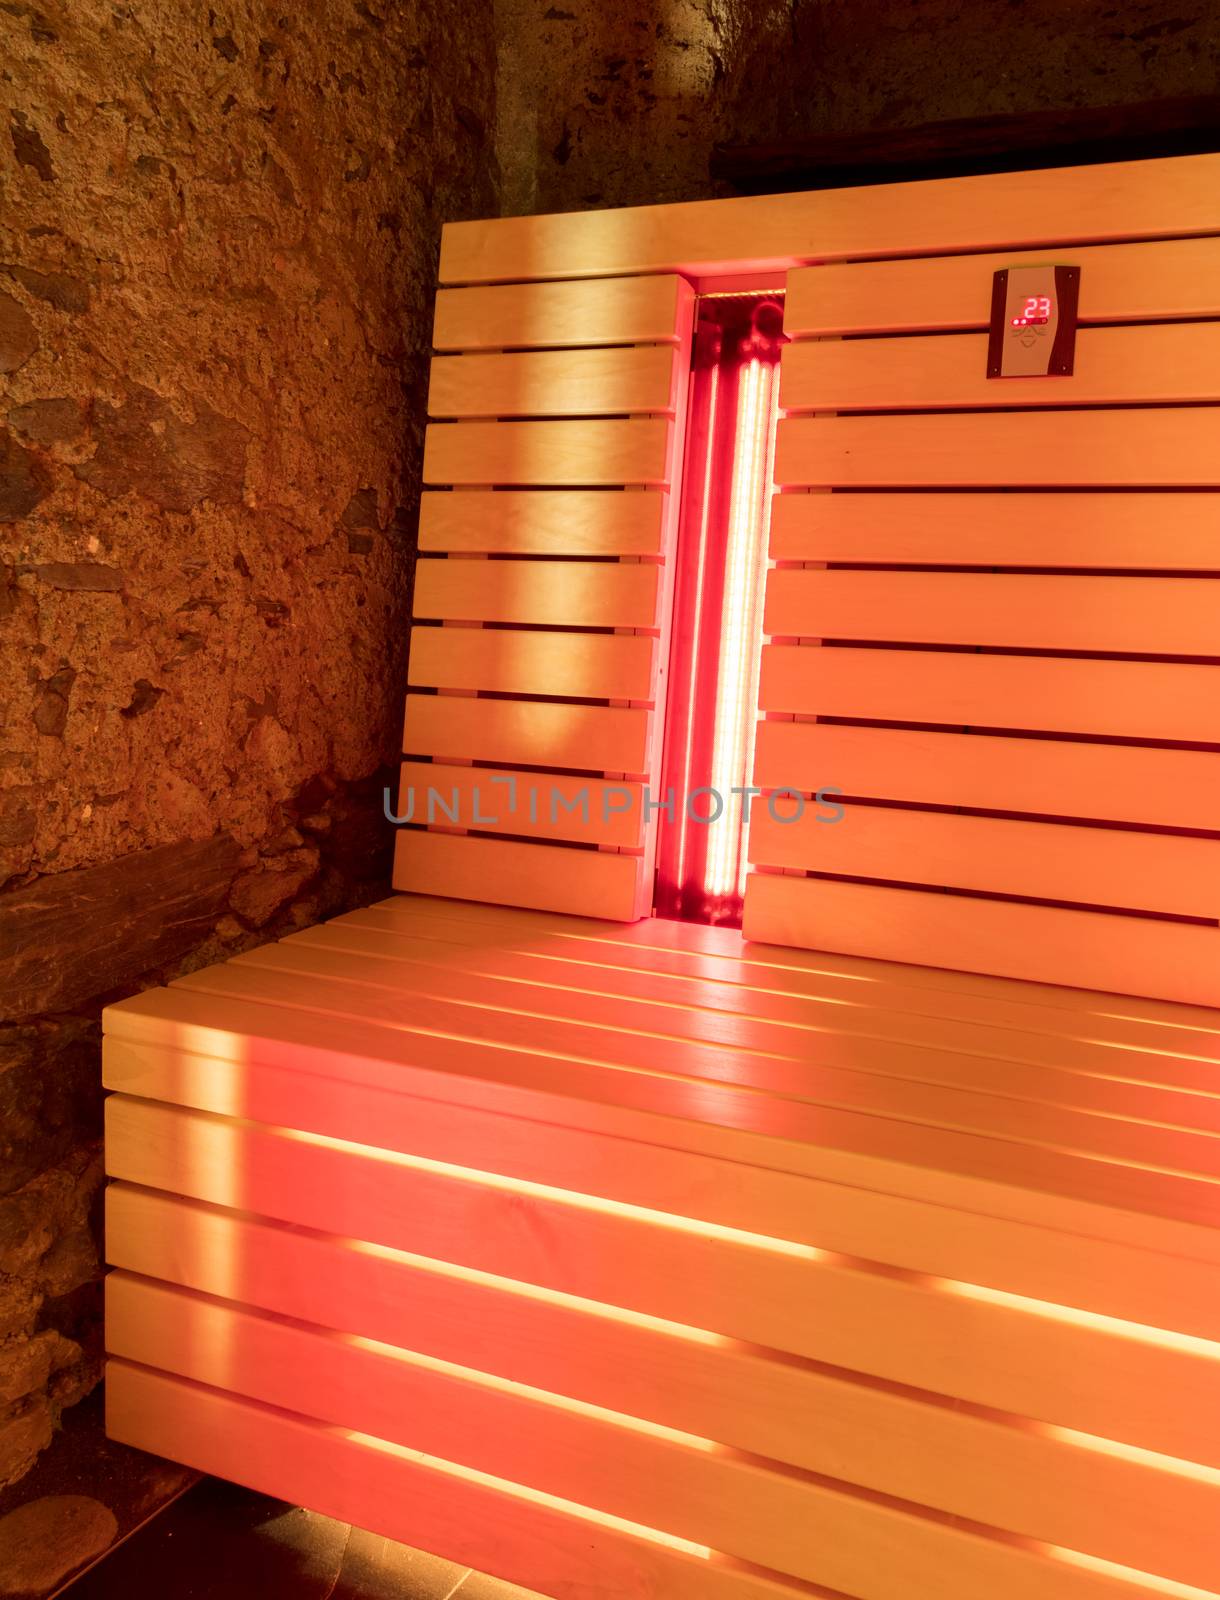 The infrared sauna by michaklootwijk